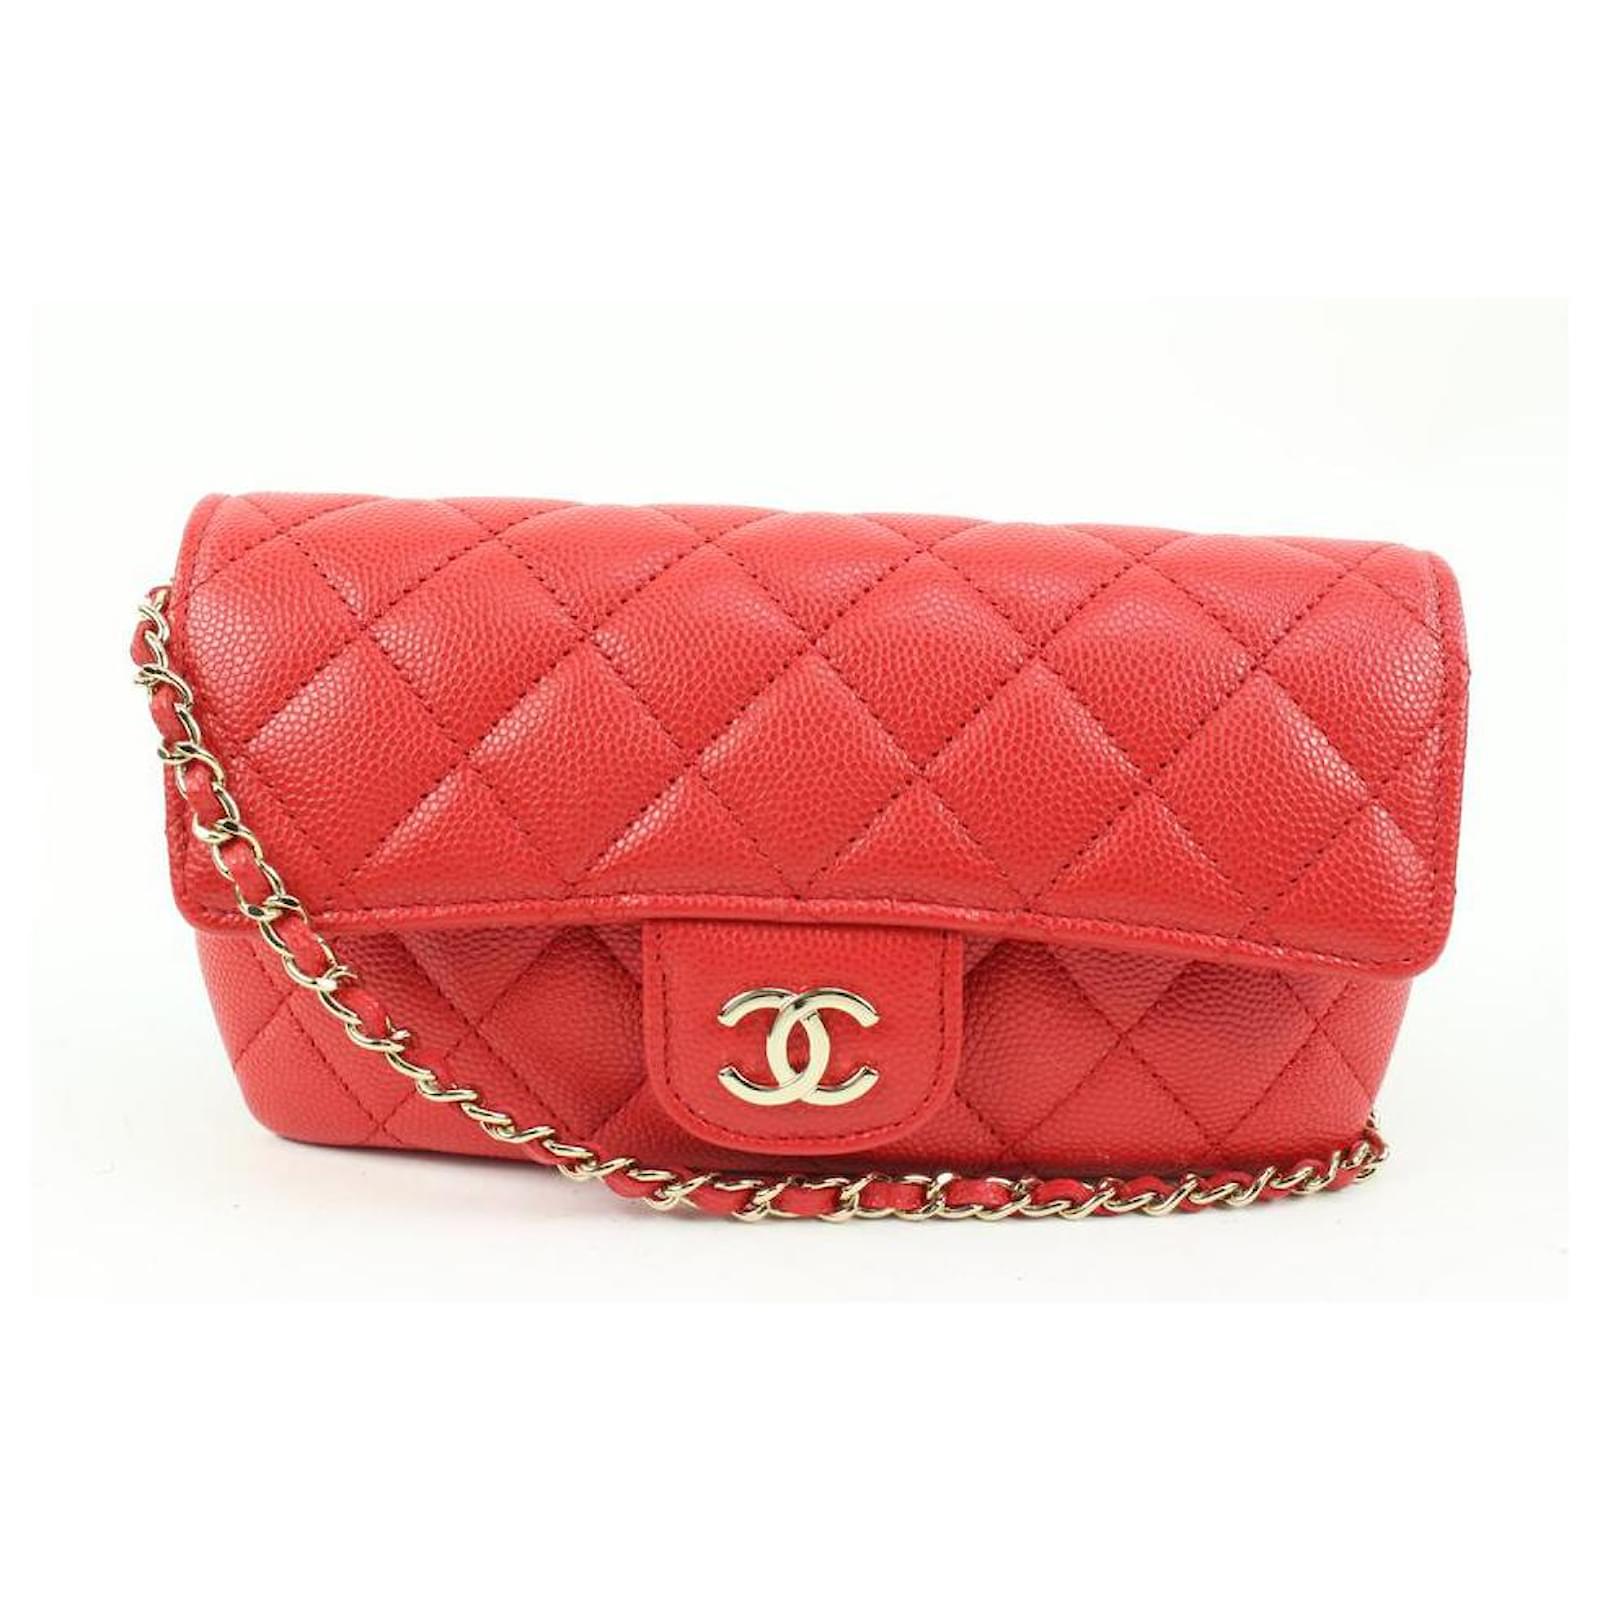 Chanel Red COCO Jumbo Flap Purse Handbag Shop Pick Up@ LA Local Store